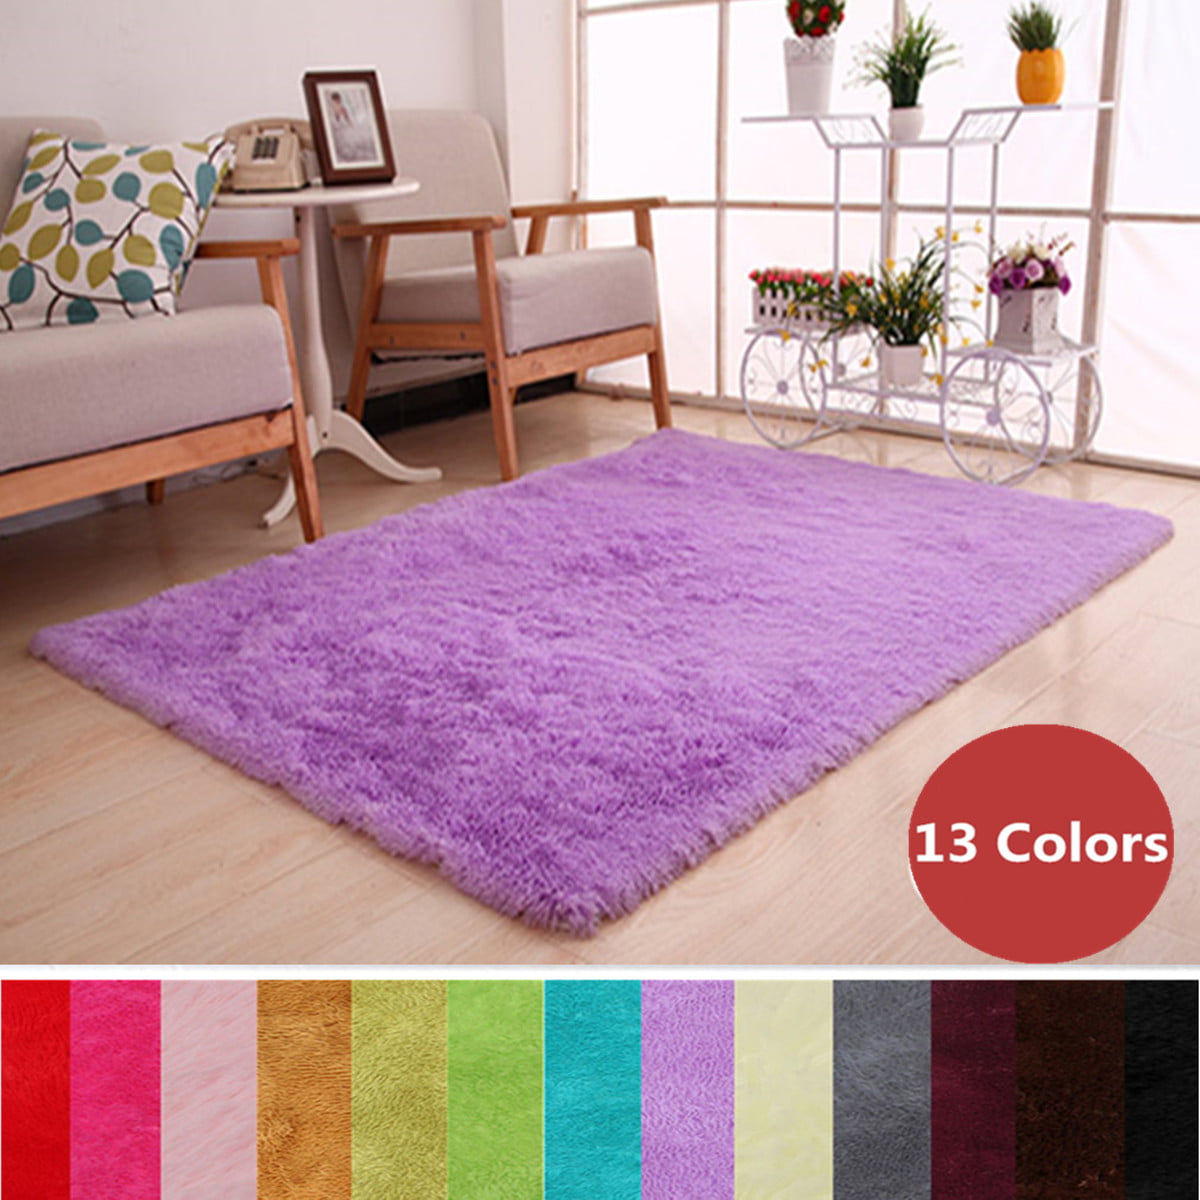 Health Spa Pink Lotus Living Room Floor Mat Anti-skid Area Rug Home Soft Carpet 